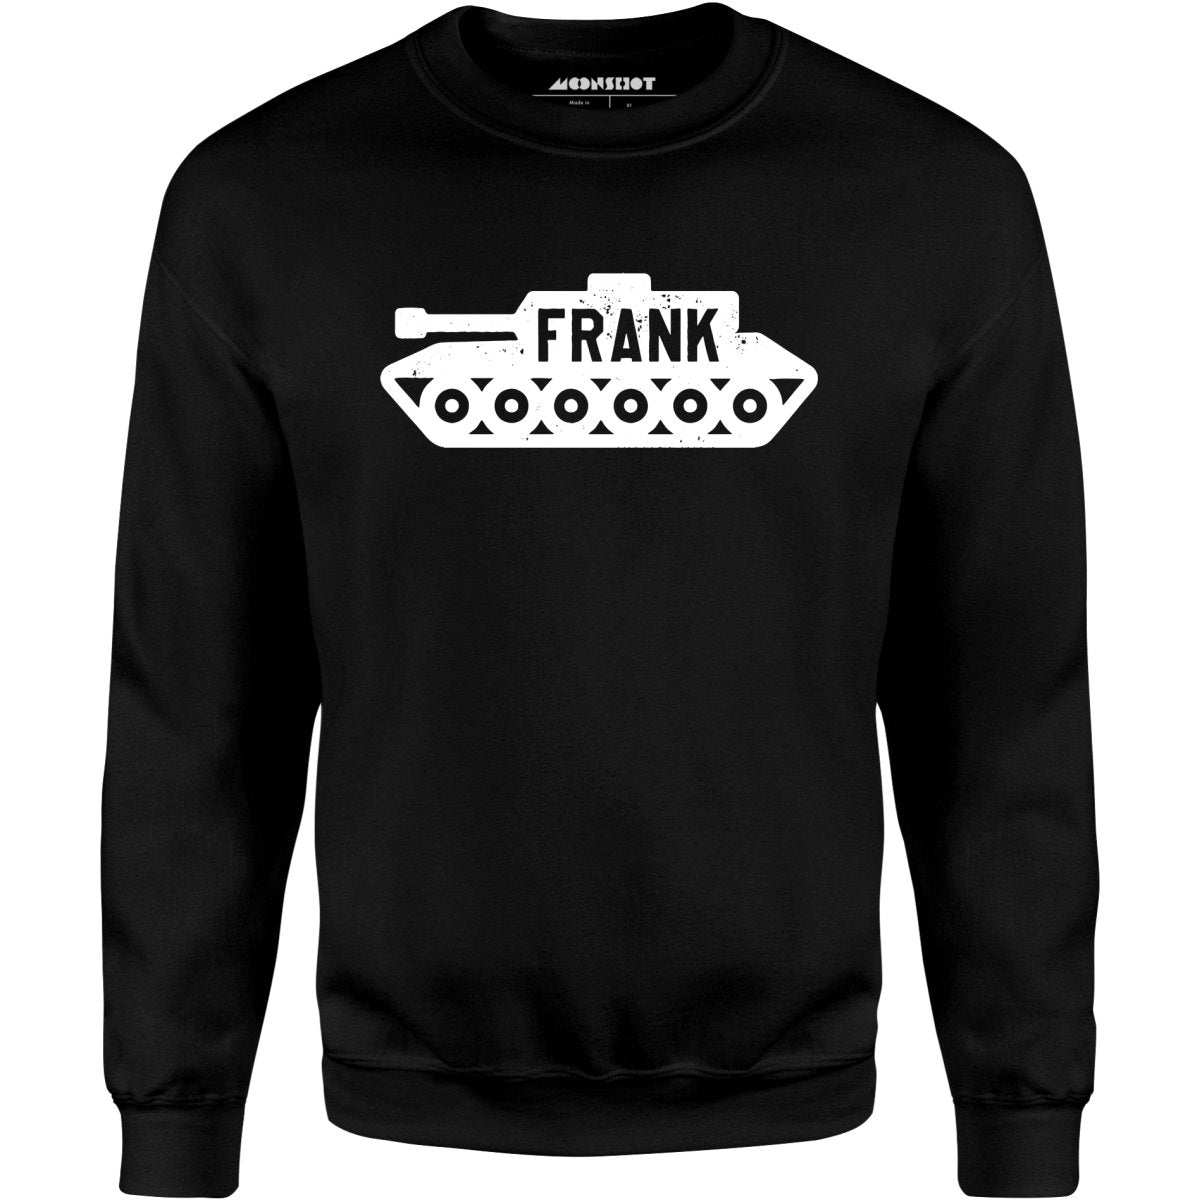 Frank the Tank - Unisex Sweatshirt